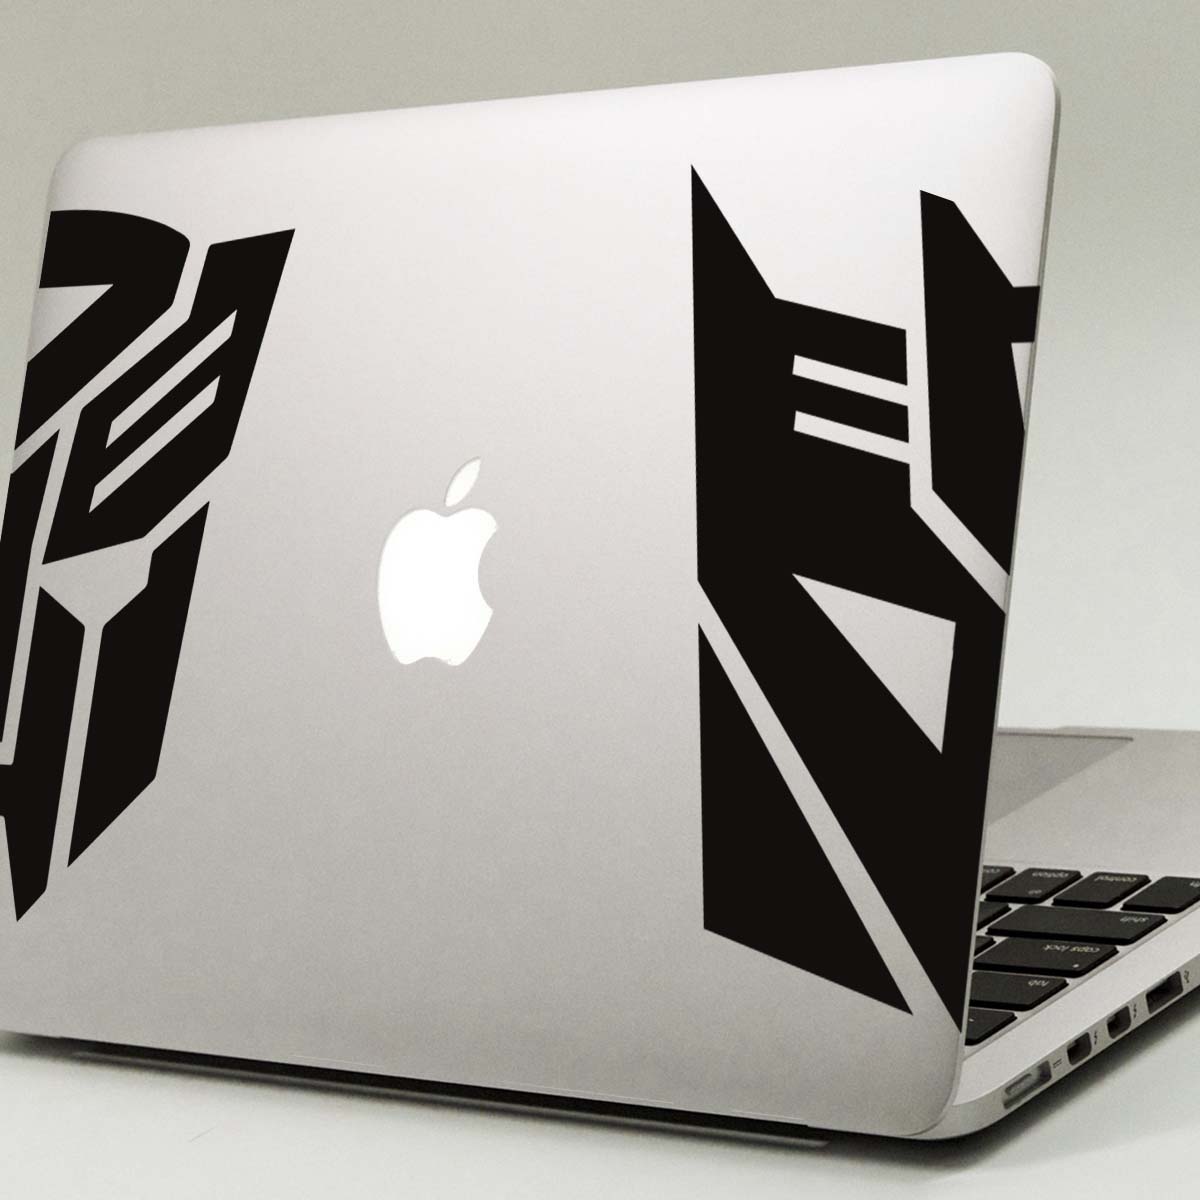 Transformers Macbook Decal